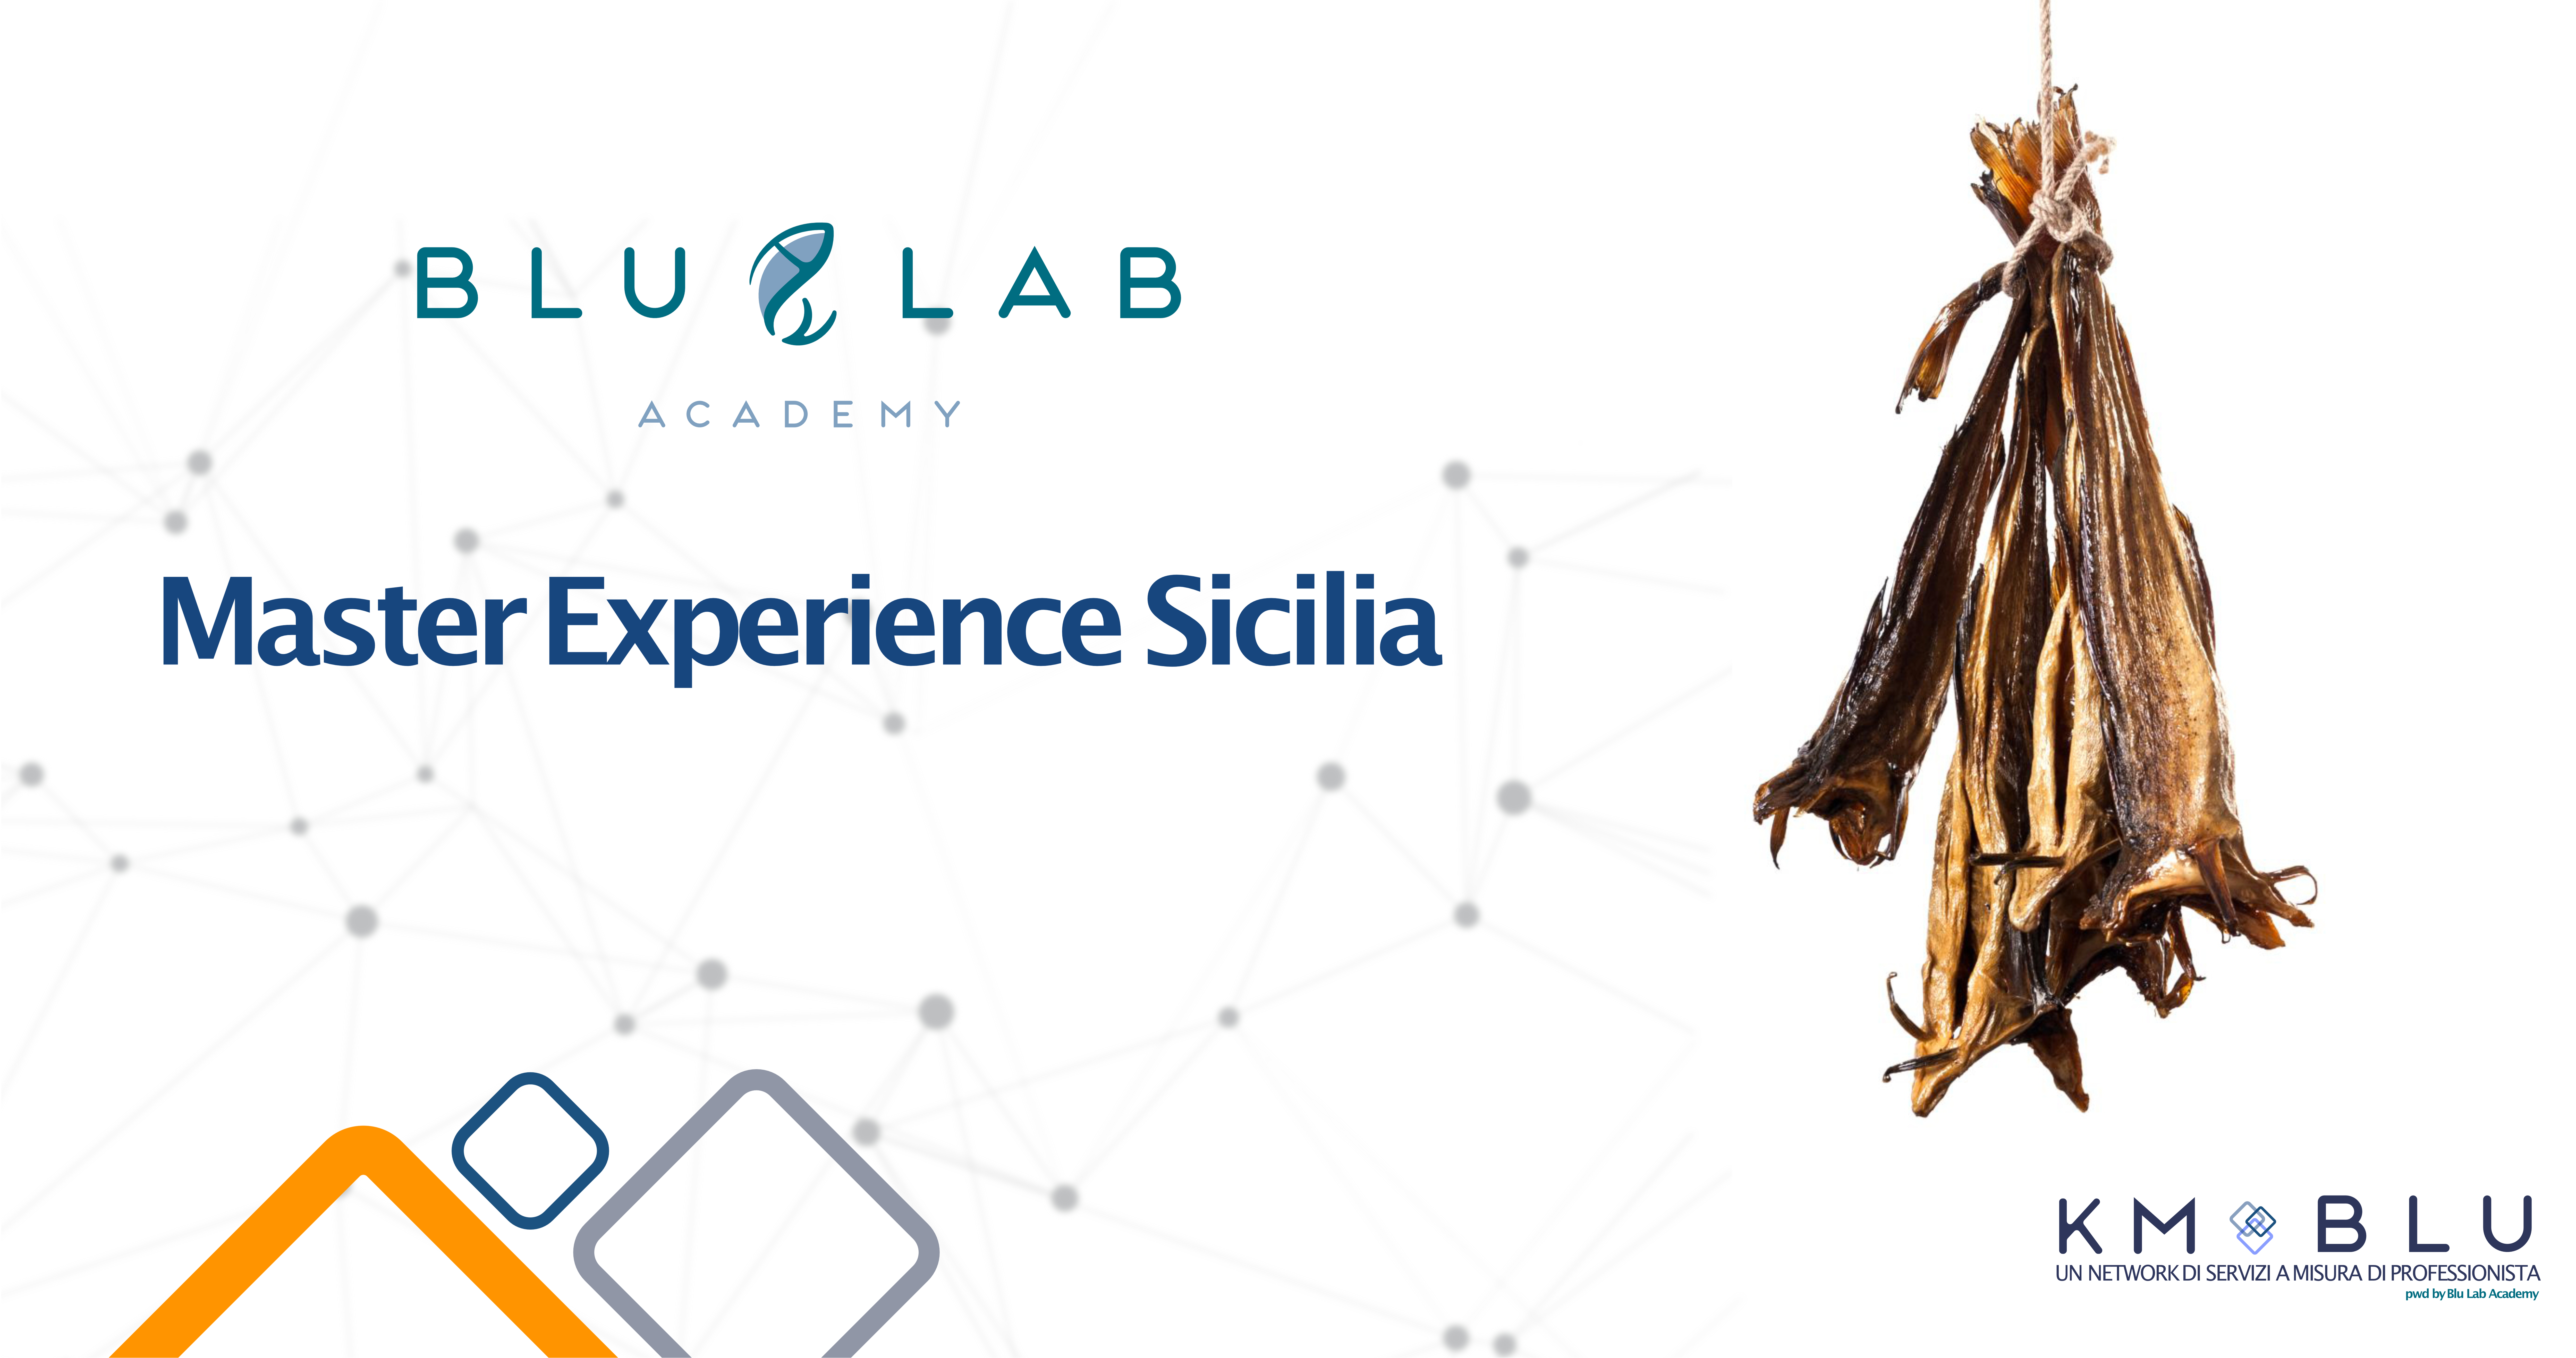 Blu Lab Academy - Master Experience Sicilia